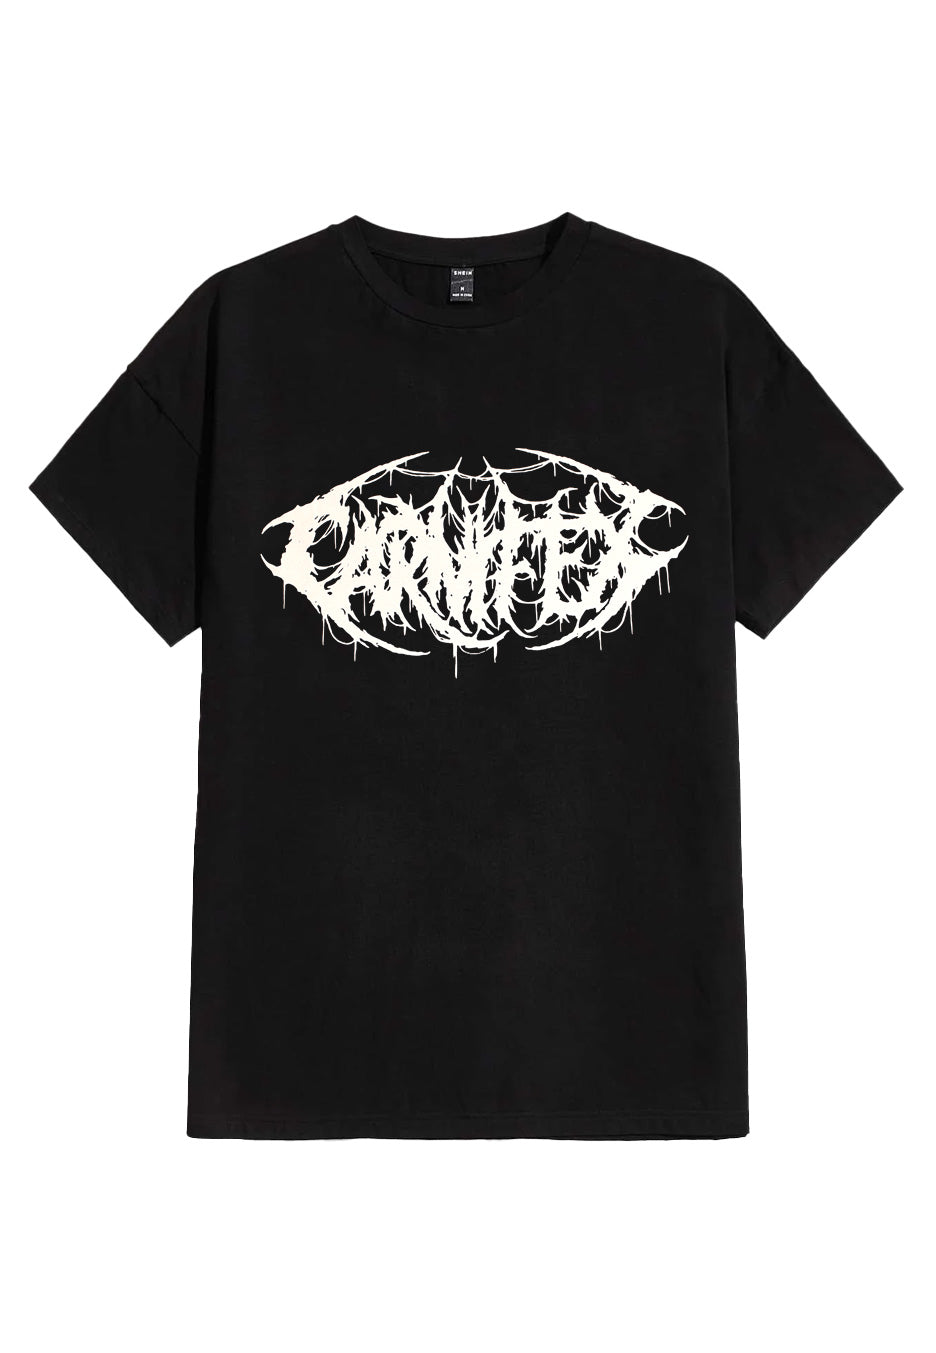 Carnifex - God Damn This World - T-Shirt